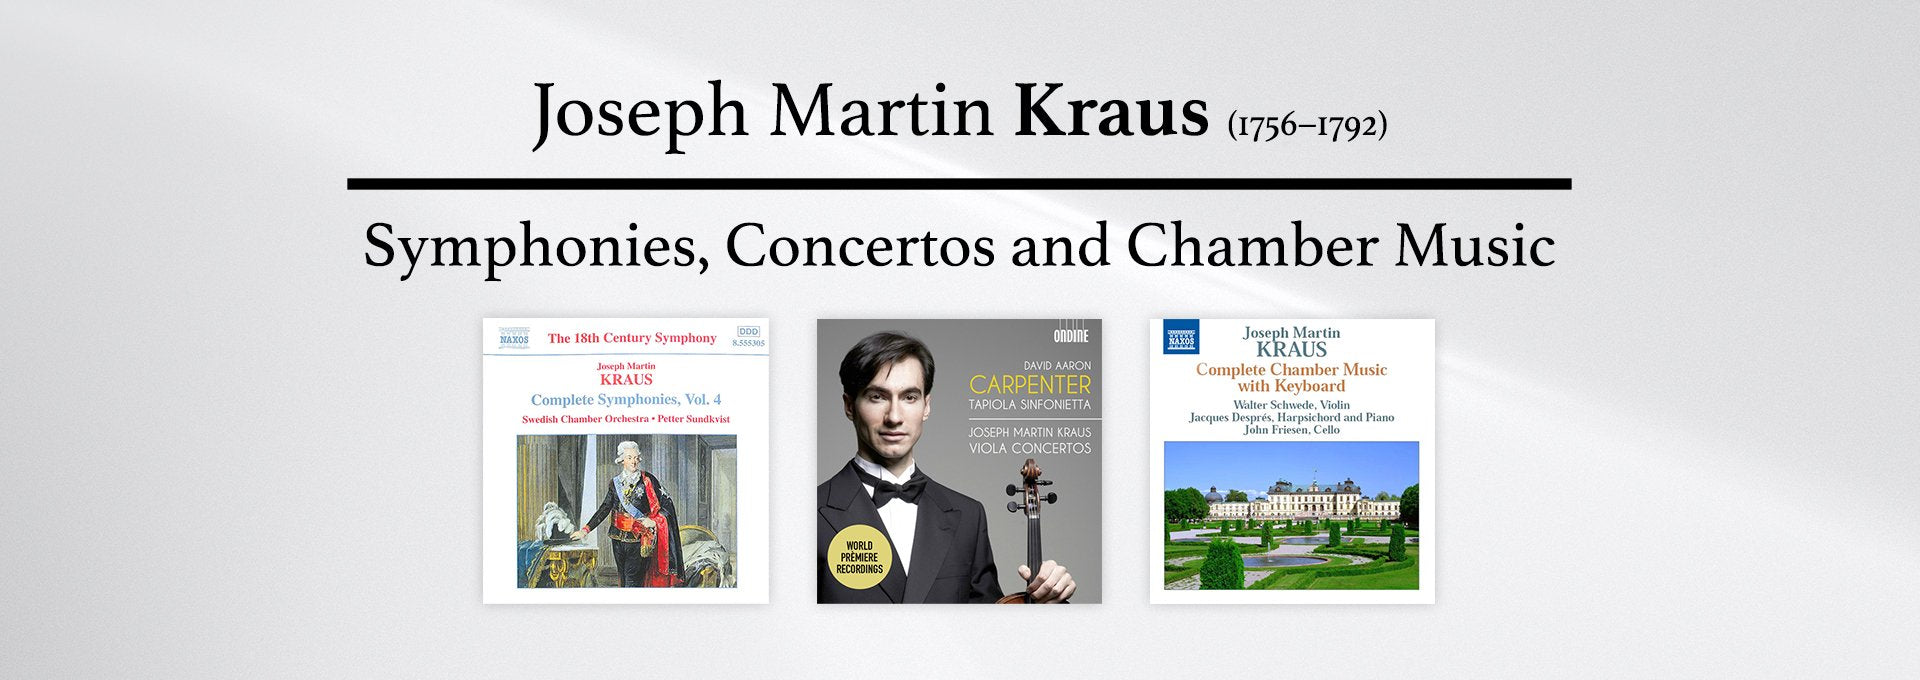 Joseph Martin Kraus Symphonies, Concertos and Chamber Music